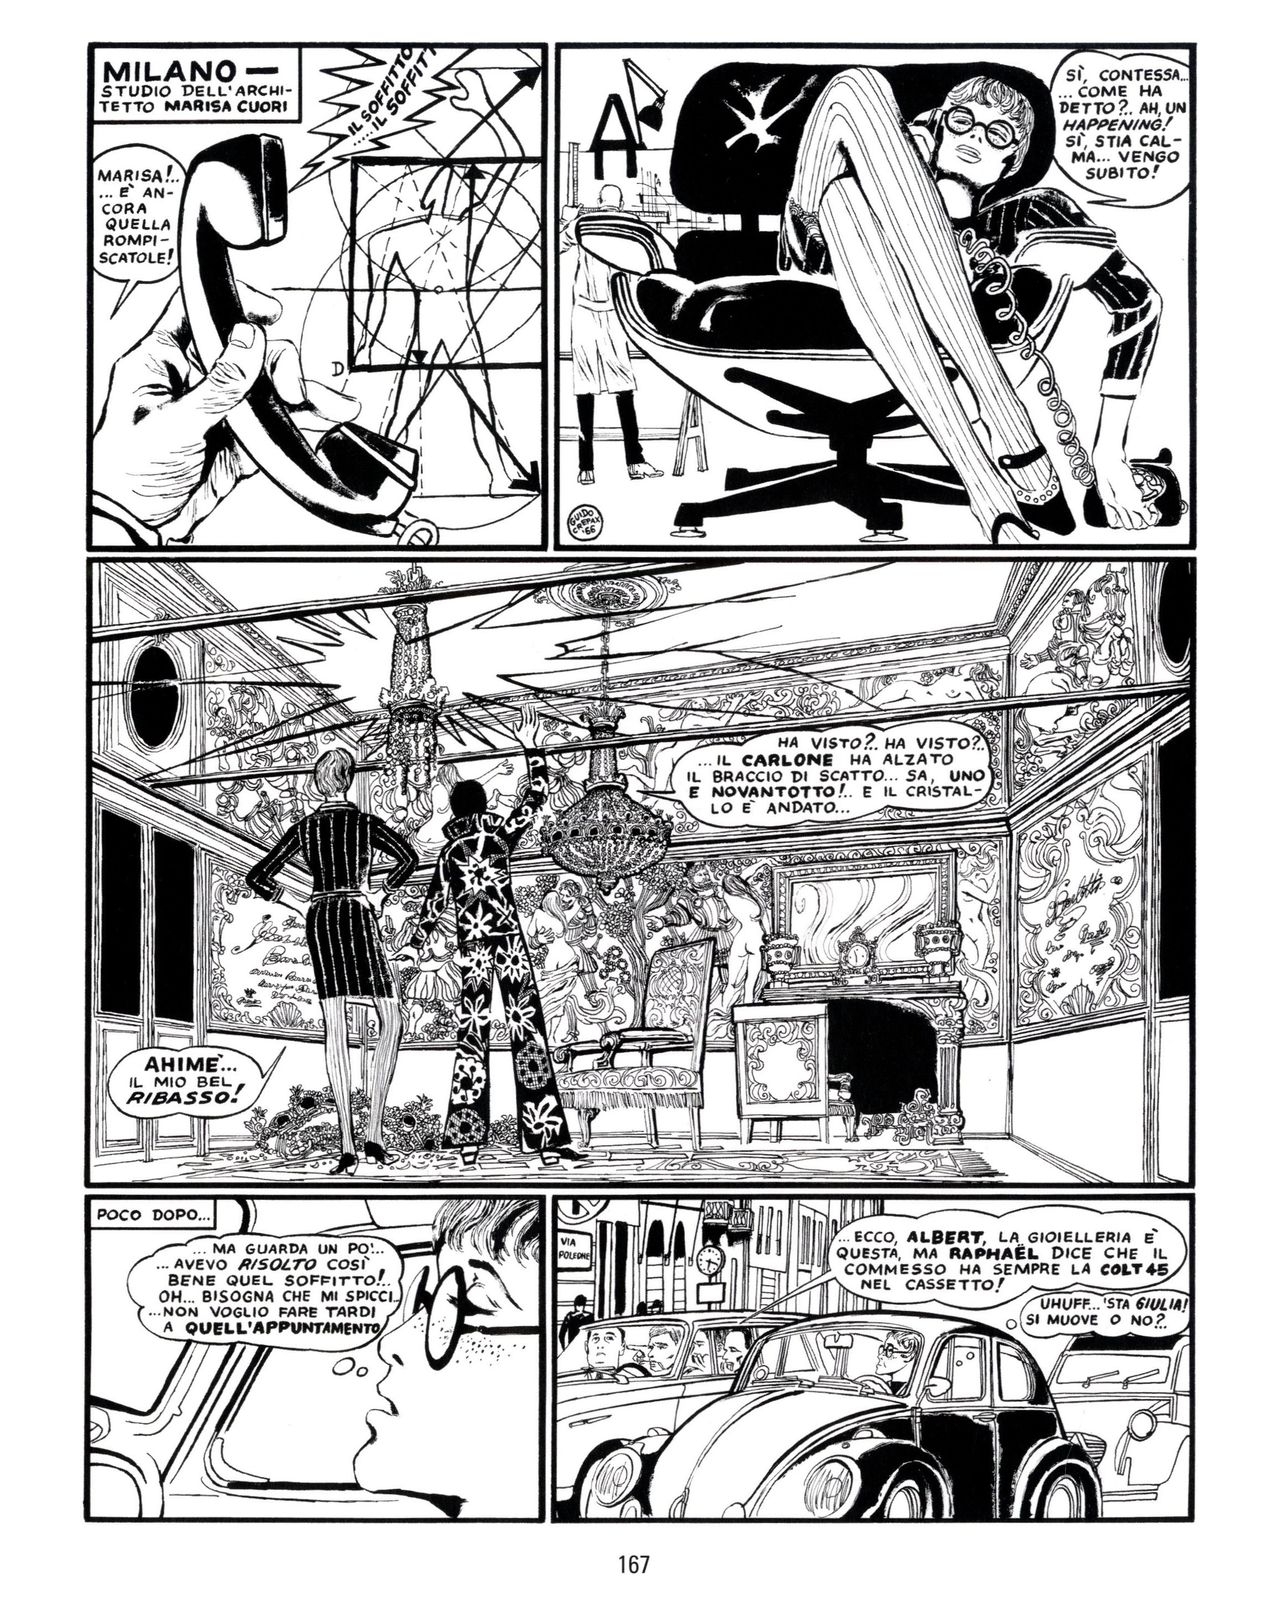 [Guido Crepax] Erotica Fumetti #25 : L'ascesa dei sotterranei : I cavalieri ciechi [Italian] 168